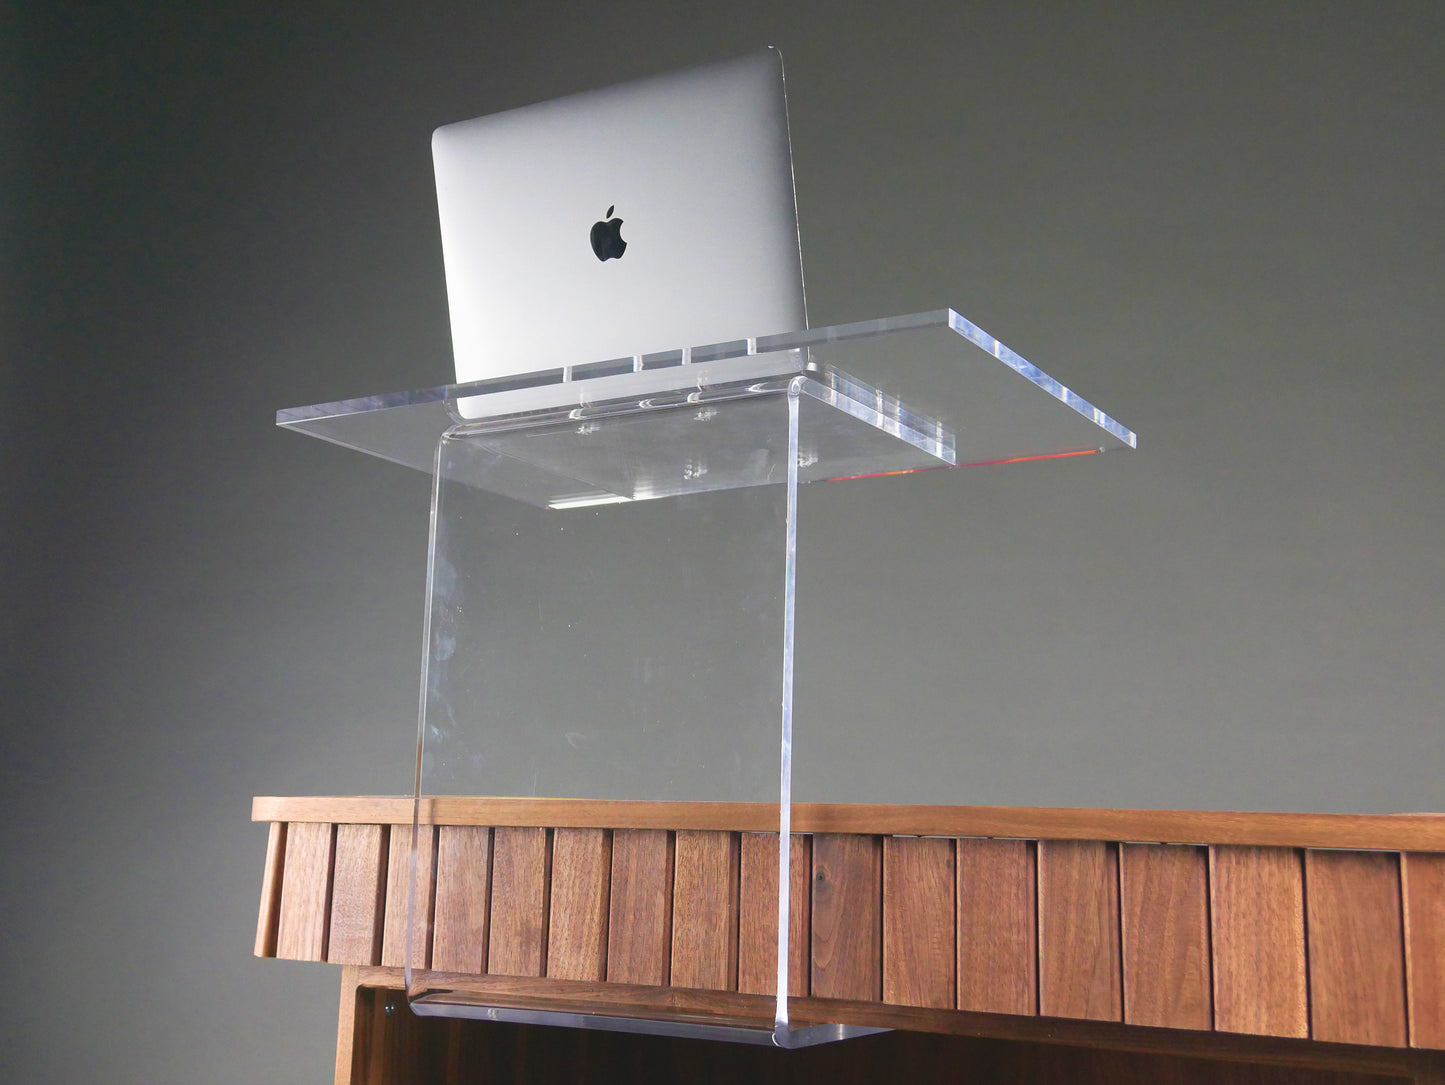 Acrylic Laptop Stand